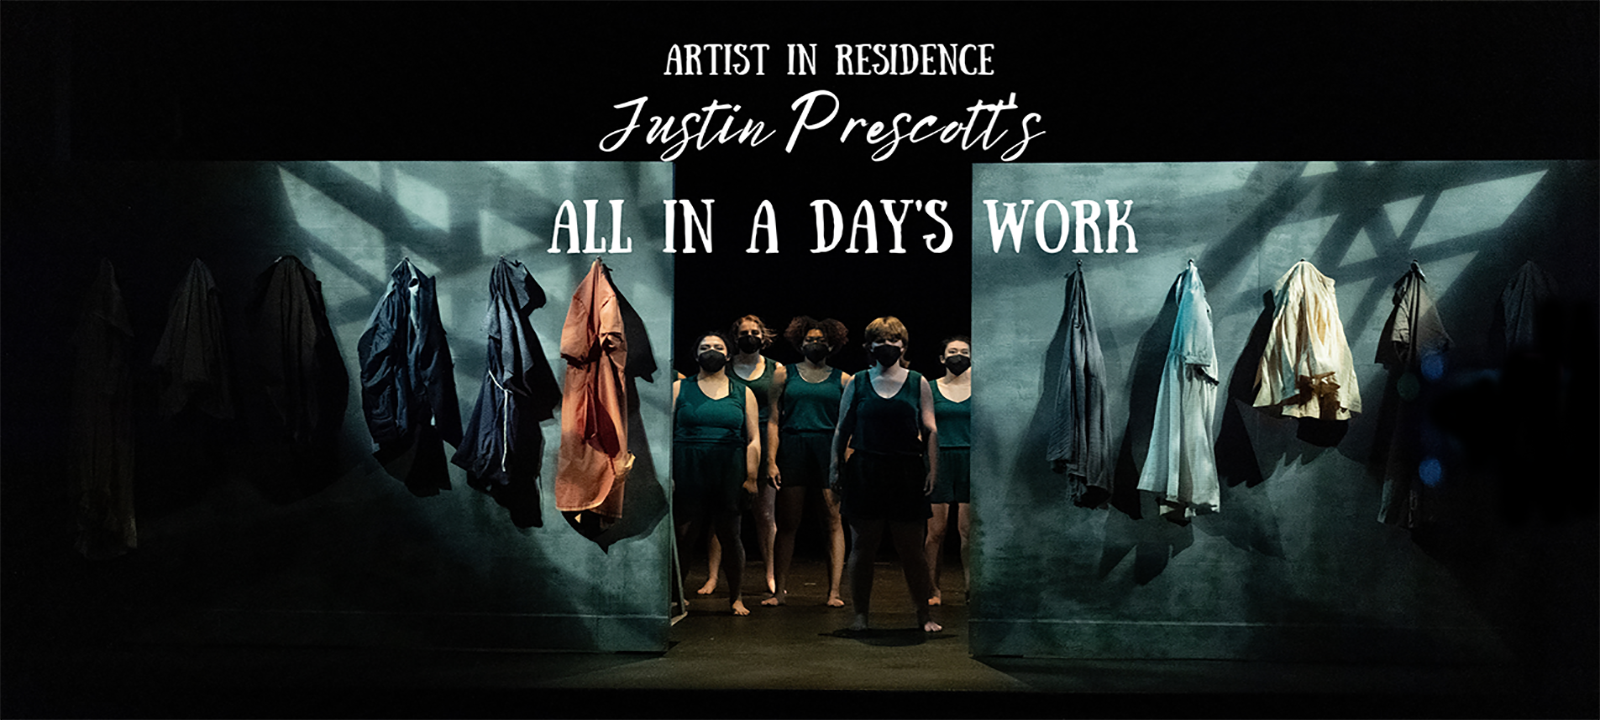 Artist in Residence Justin Prescott Creates Original Movement-Based Show for Loyola Students